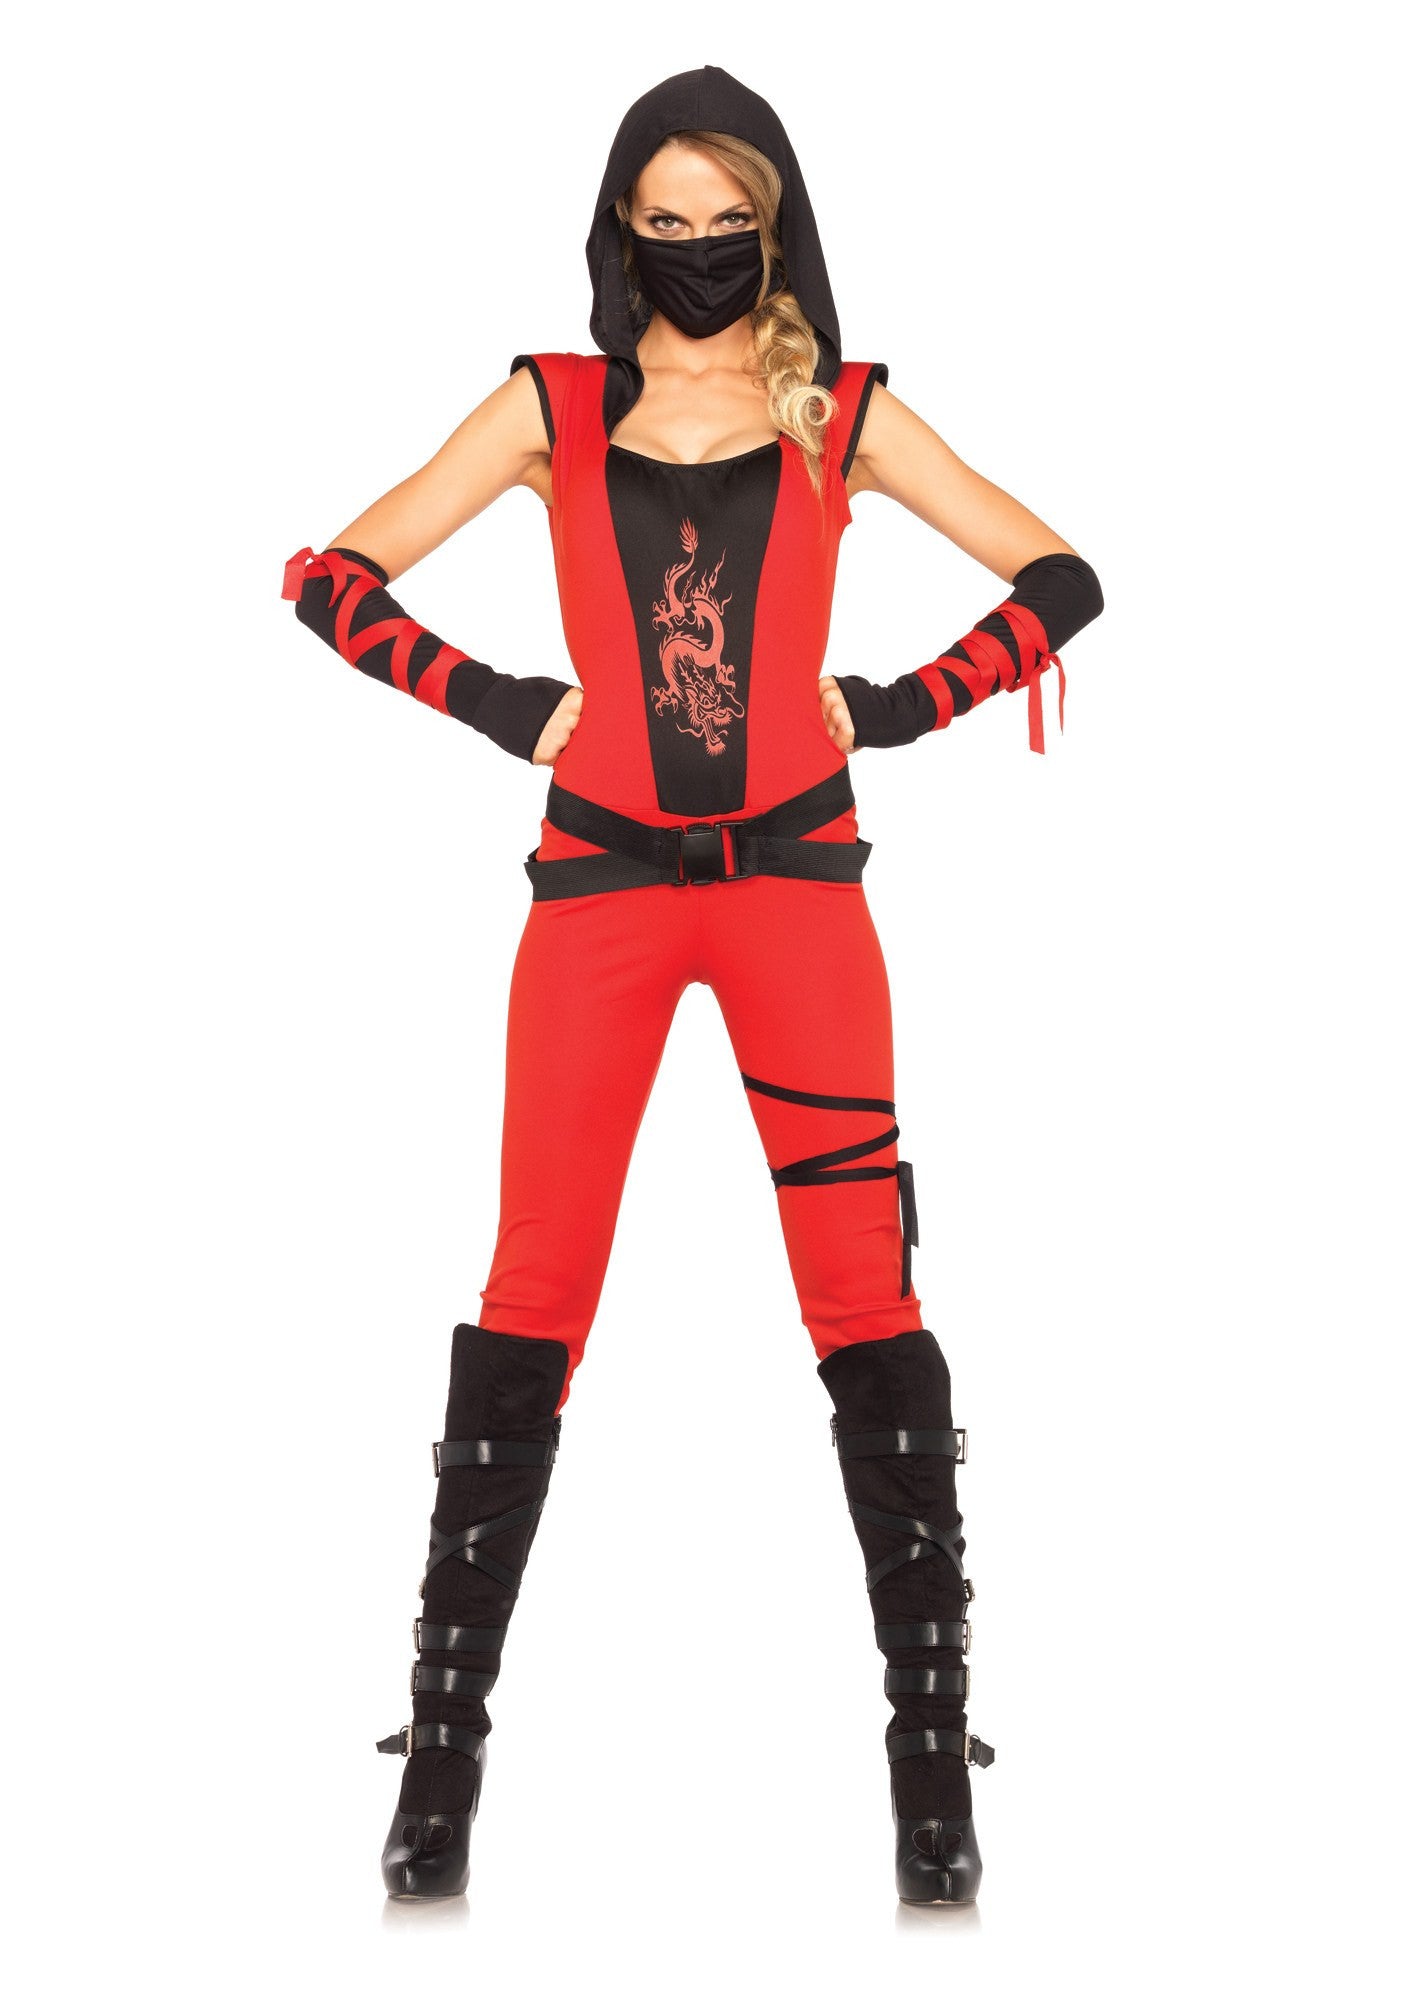 Costume - Red Ninja Assassin